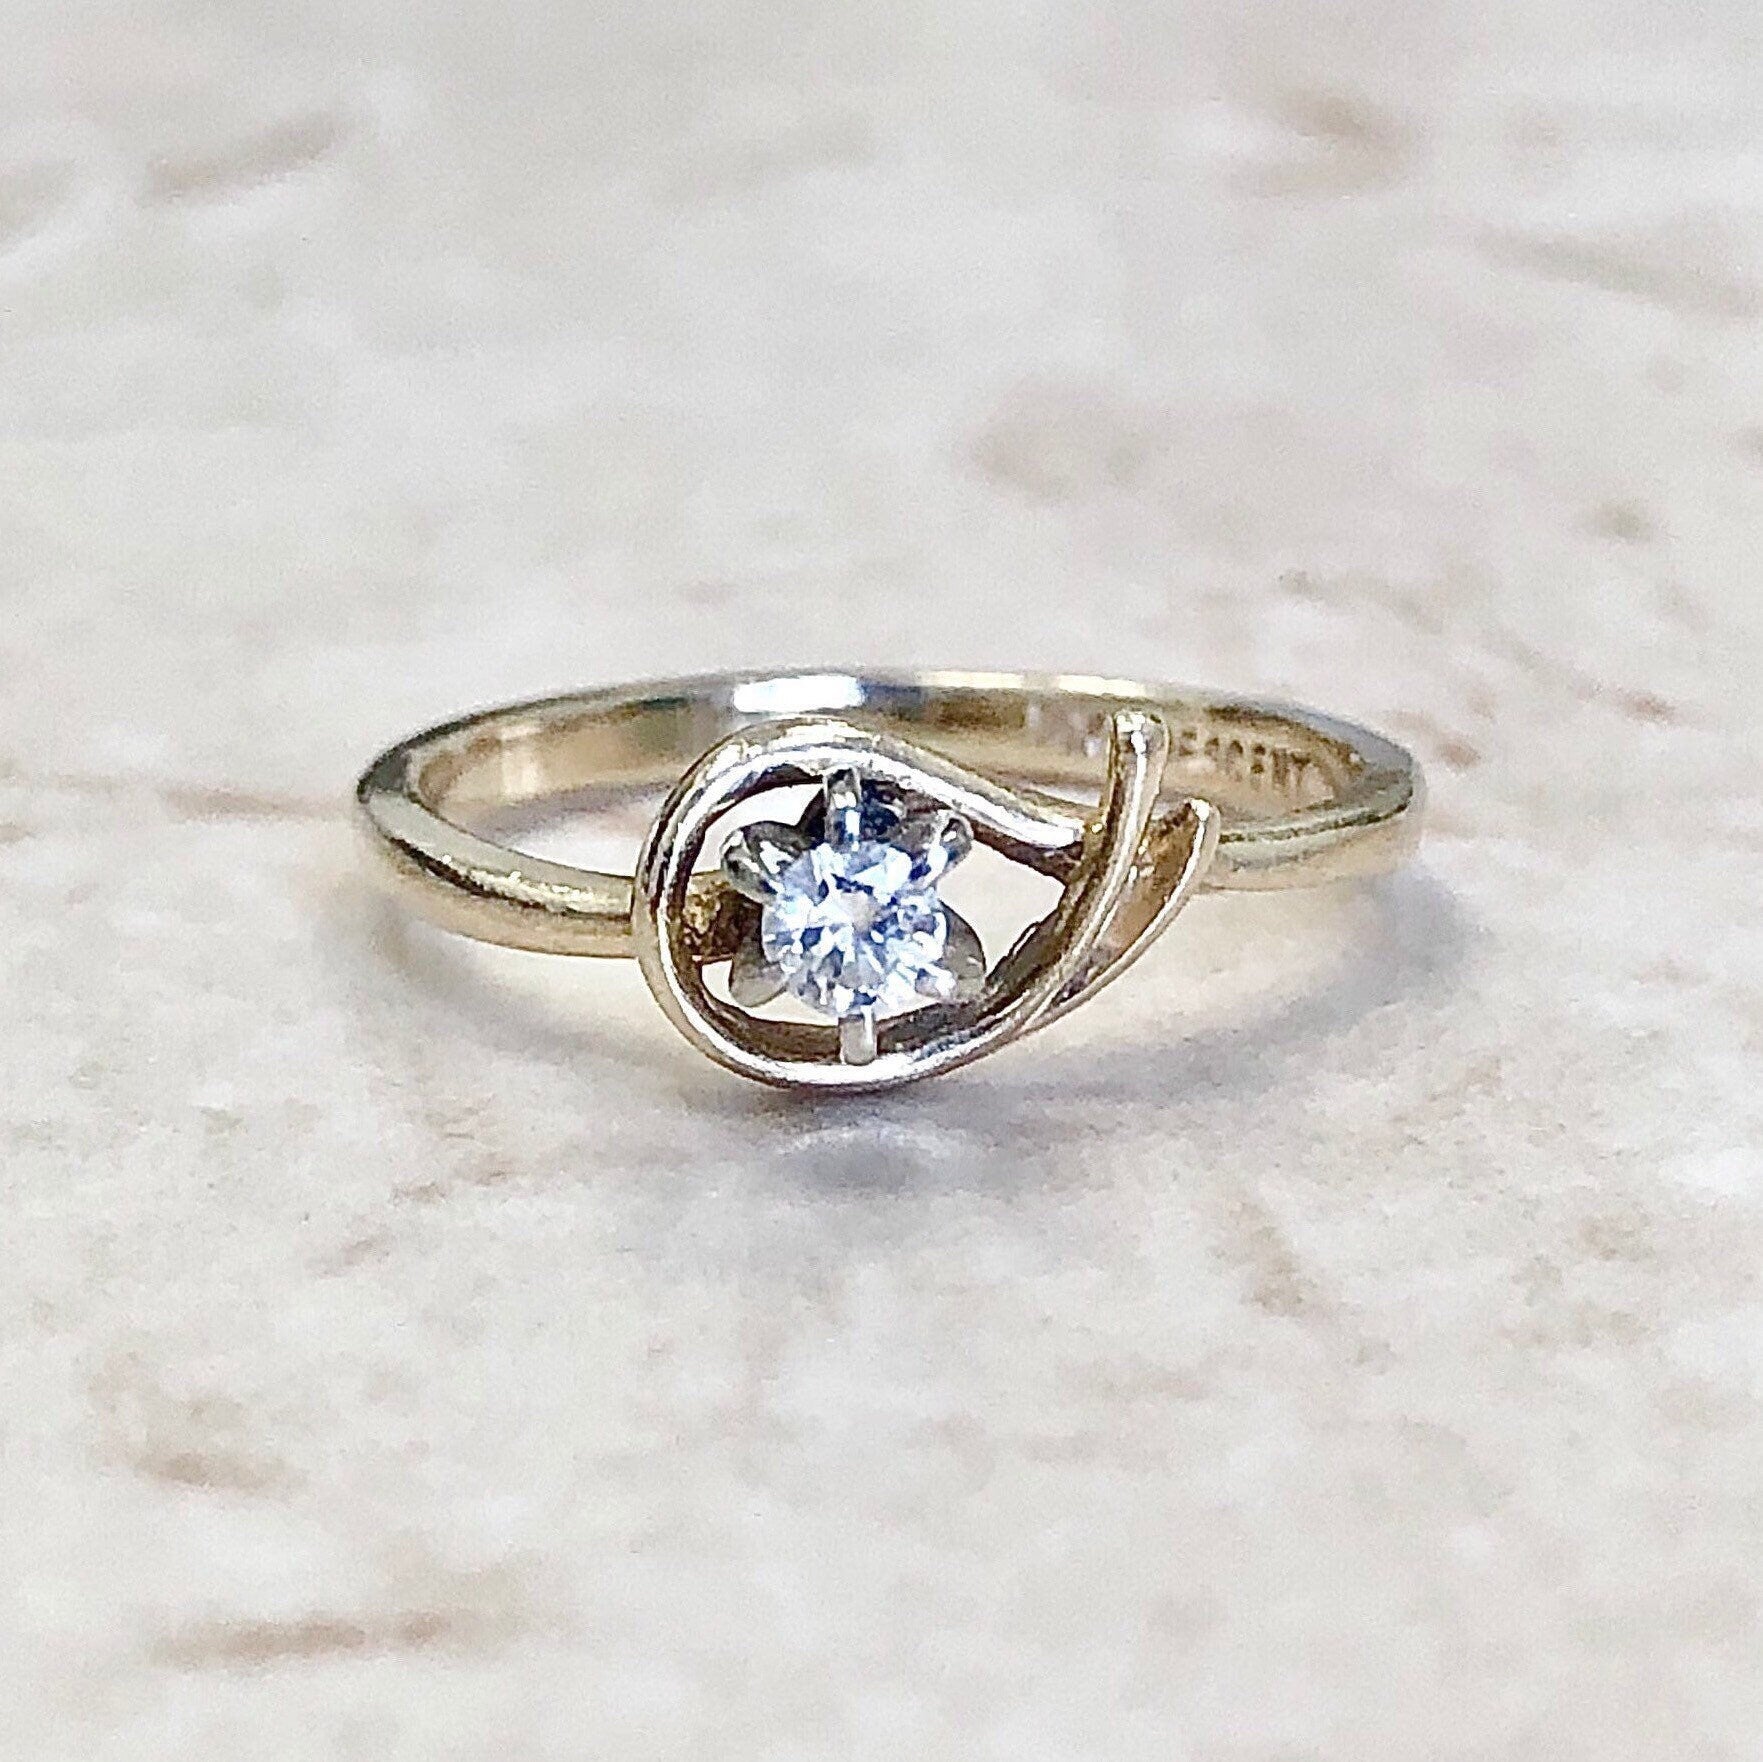 Vintage 14 Karat Gold Diamond Solitaire Ring - Diamond Engagement Ring - April Birthstone - Promise Ring - Size 5 - Bridal Ring